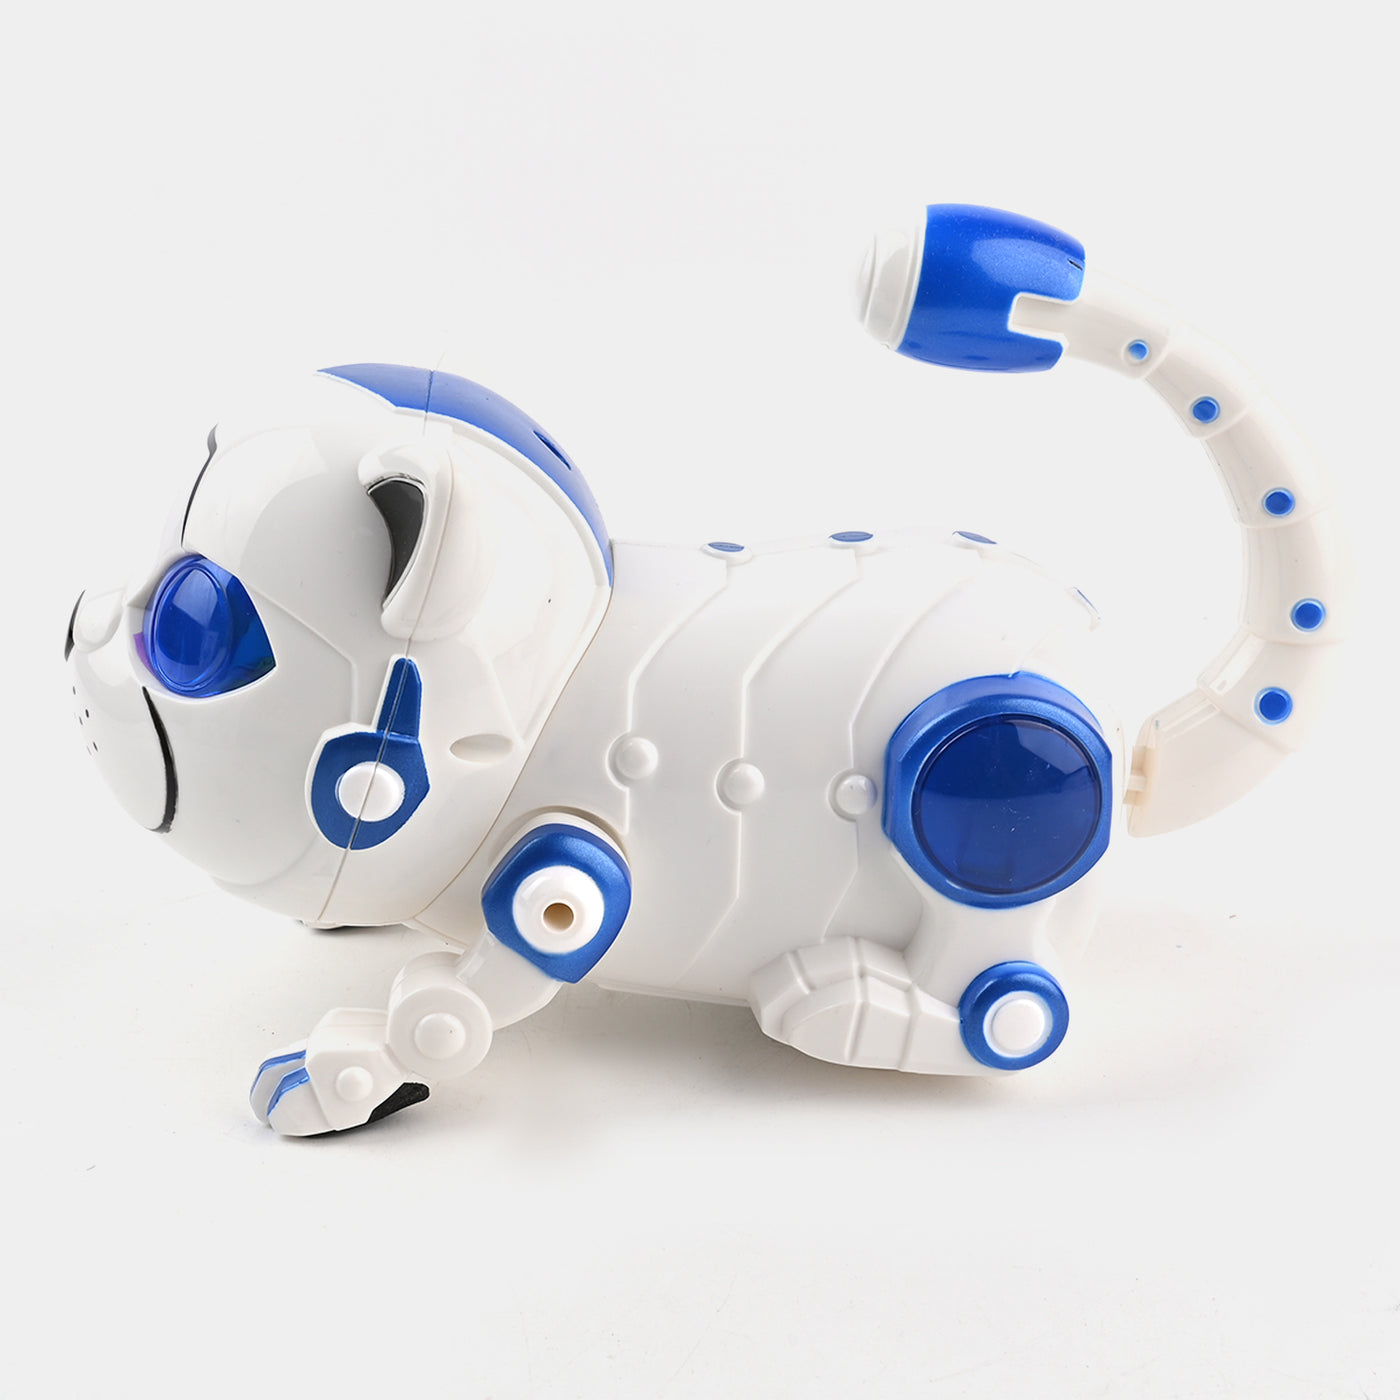 Light & Musical Dancing Robot Cat Toy For Kids